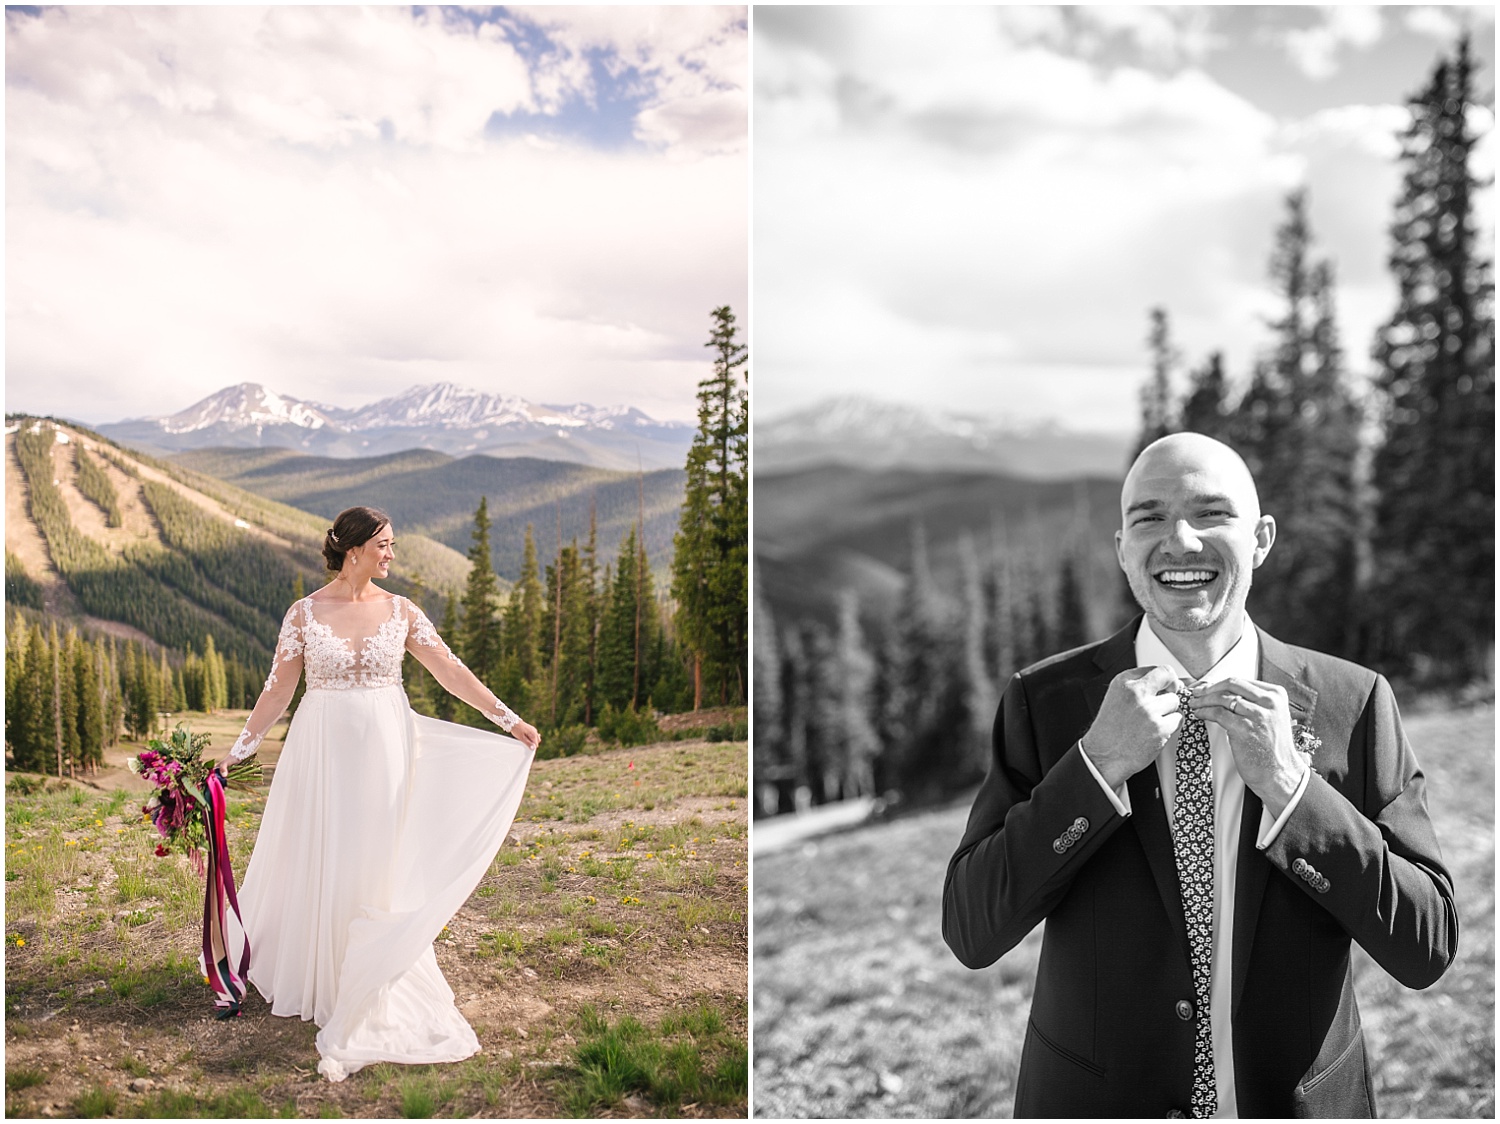 Bride and groom portraits at summit of Keystone Colorado for Ski Tip Lodge wedding